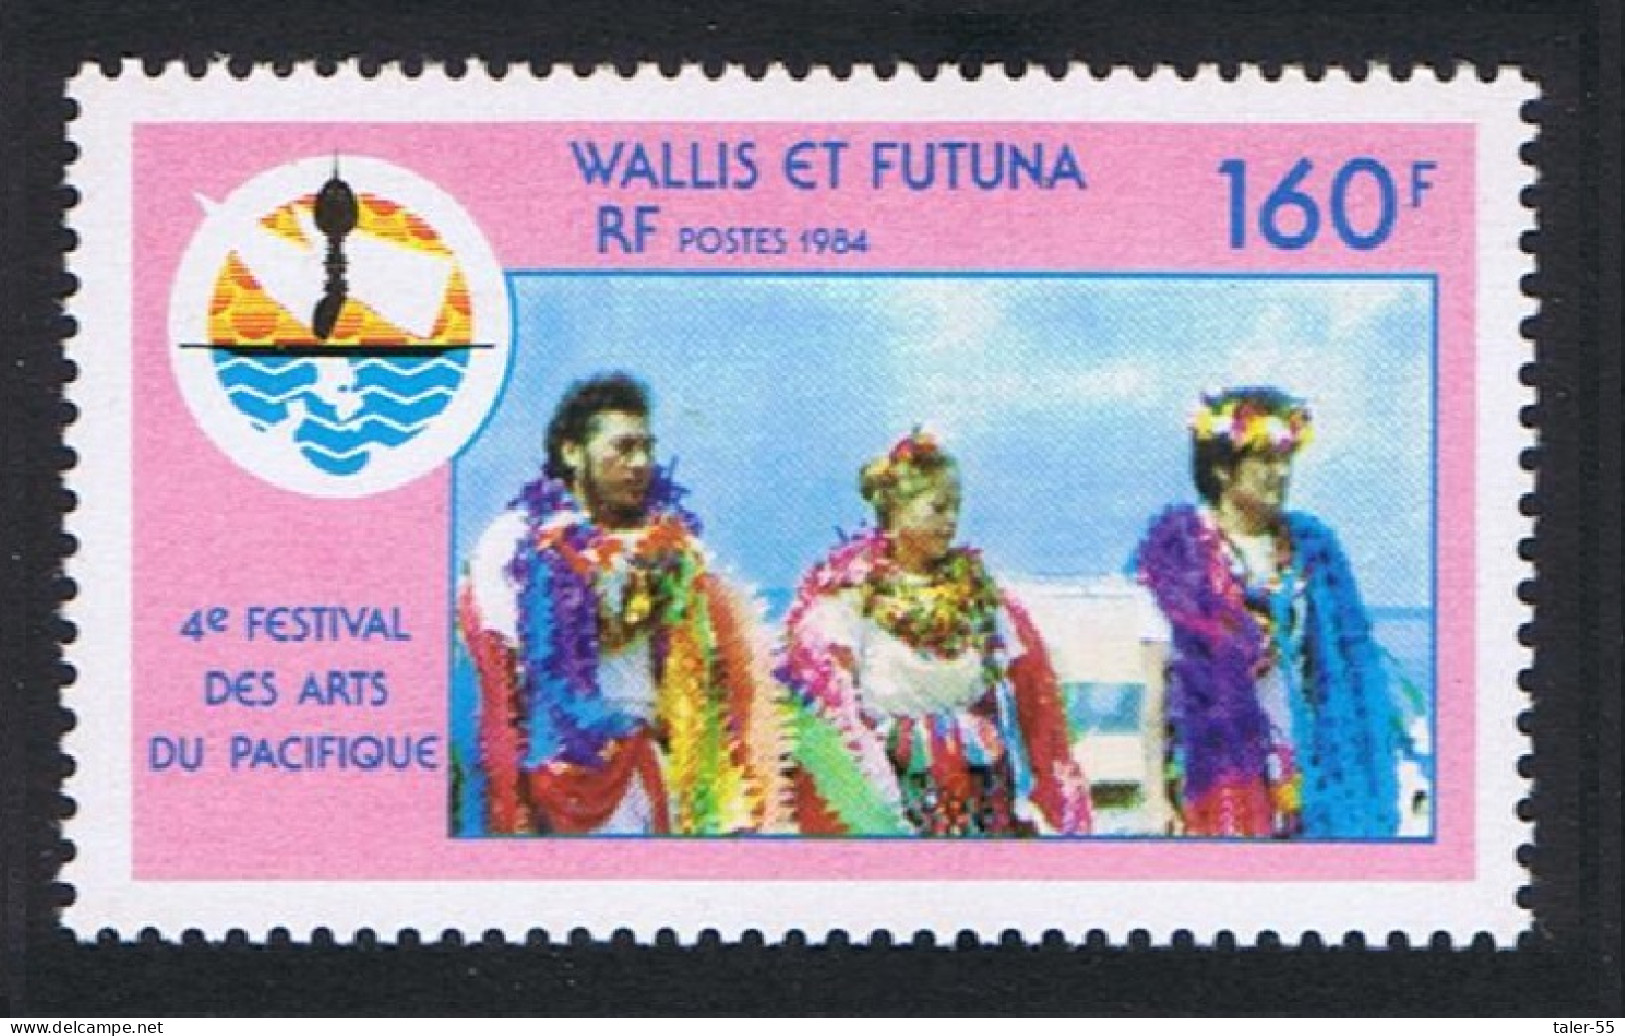 Wallis And Futuna 4th Pacific Arts Festival 1984 MNH SG#456 Sc#318 - Unused Stamps